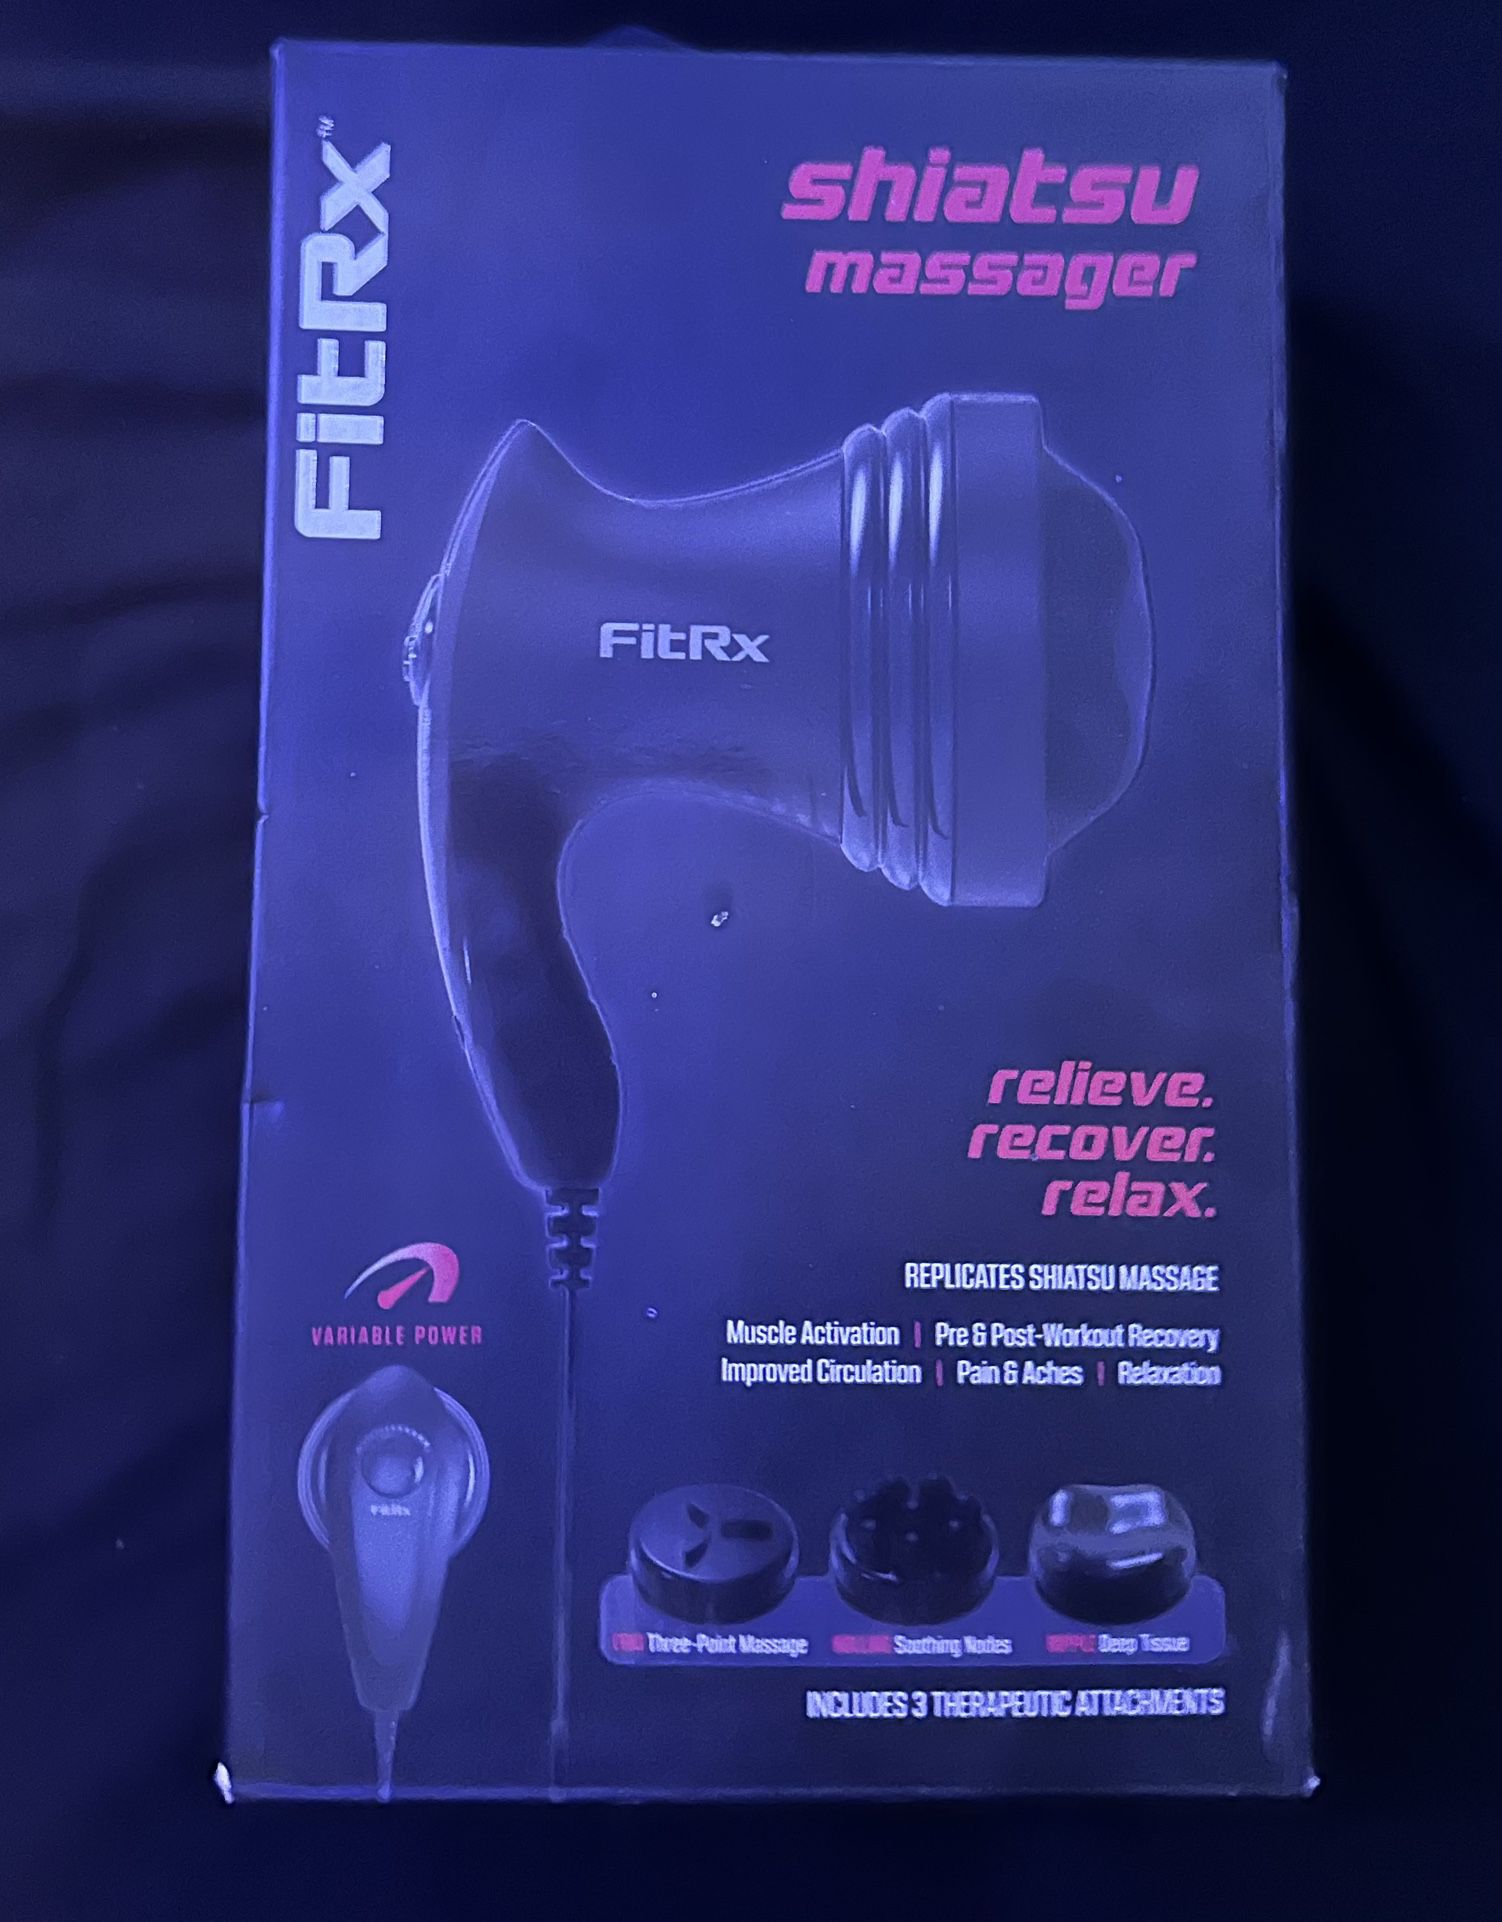 Personal massager